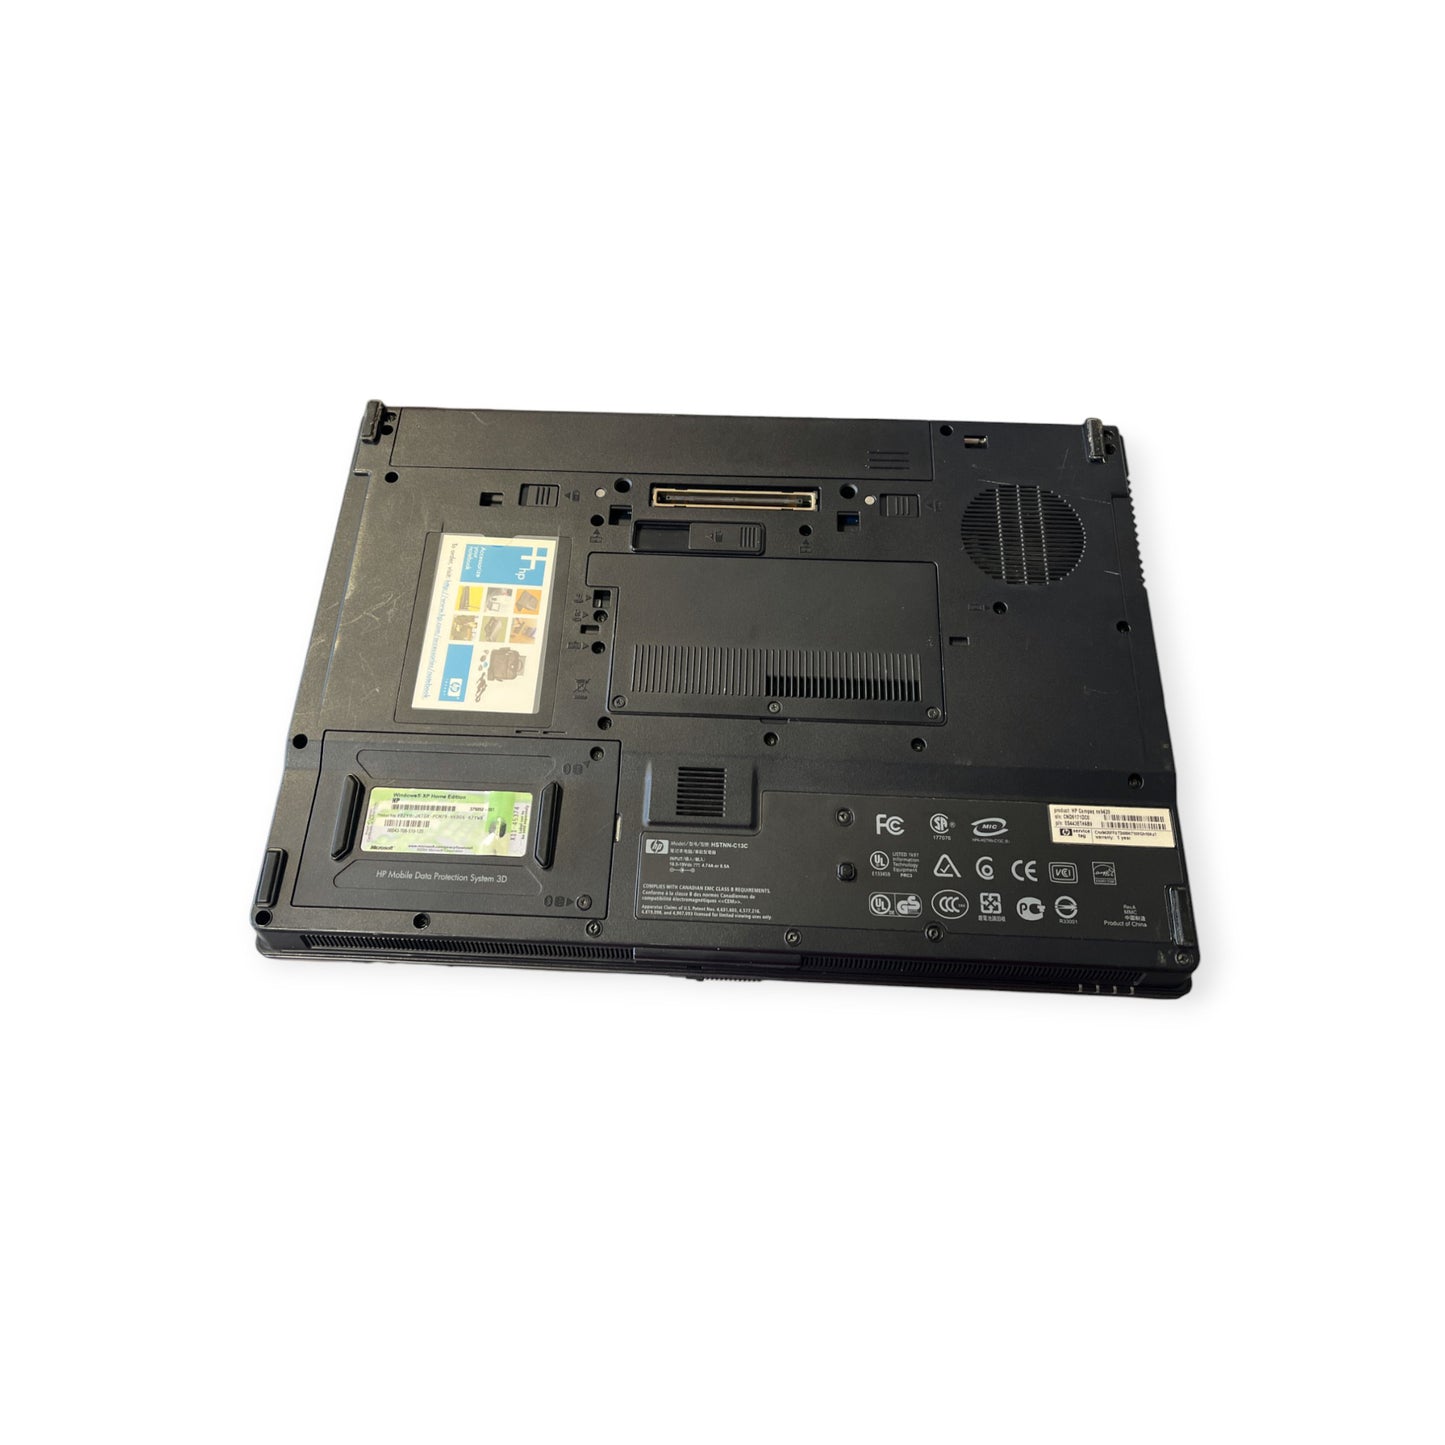 Portátil HP NX9420 T2400 2GB Ram 120GB HDD Linux Mint | Estado: Muito Bom